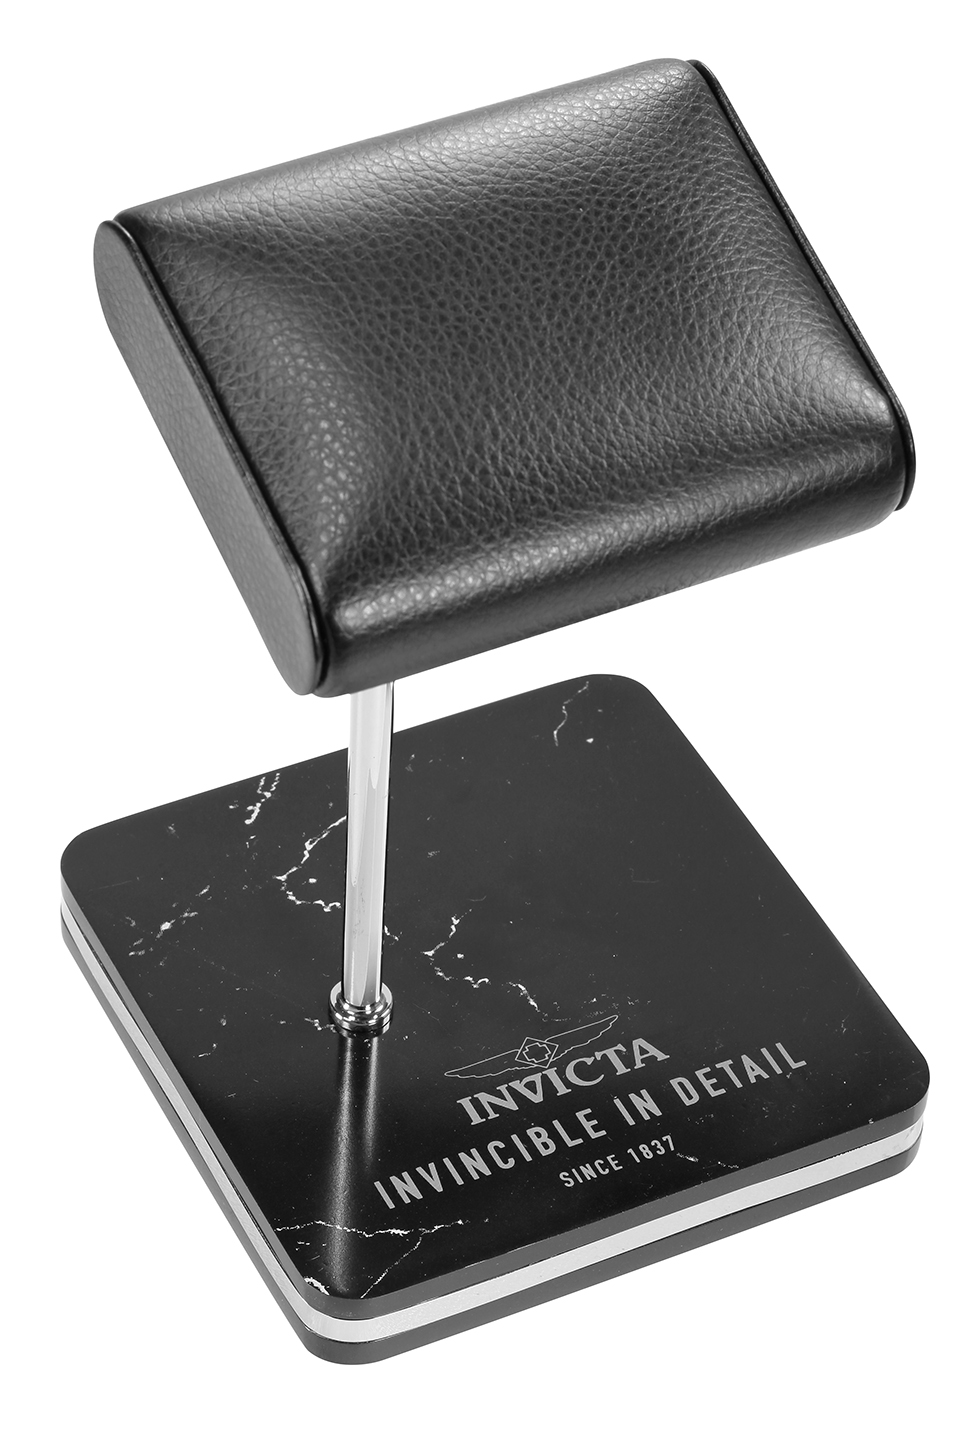 Invicta Watch Stand, Black & Steel (34501)